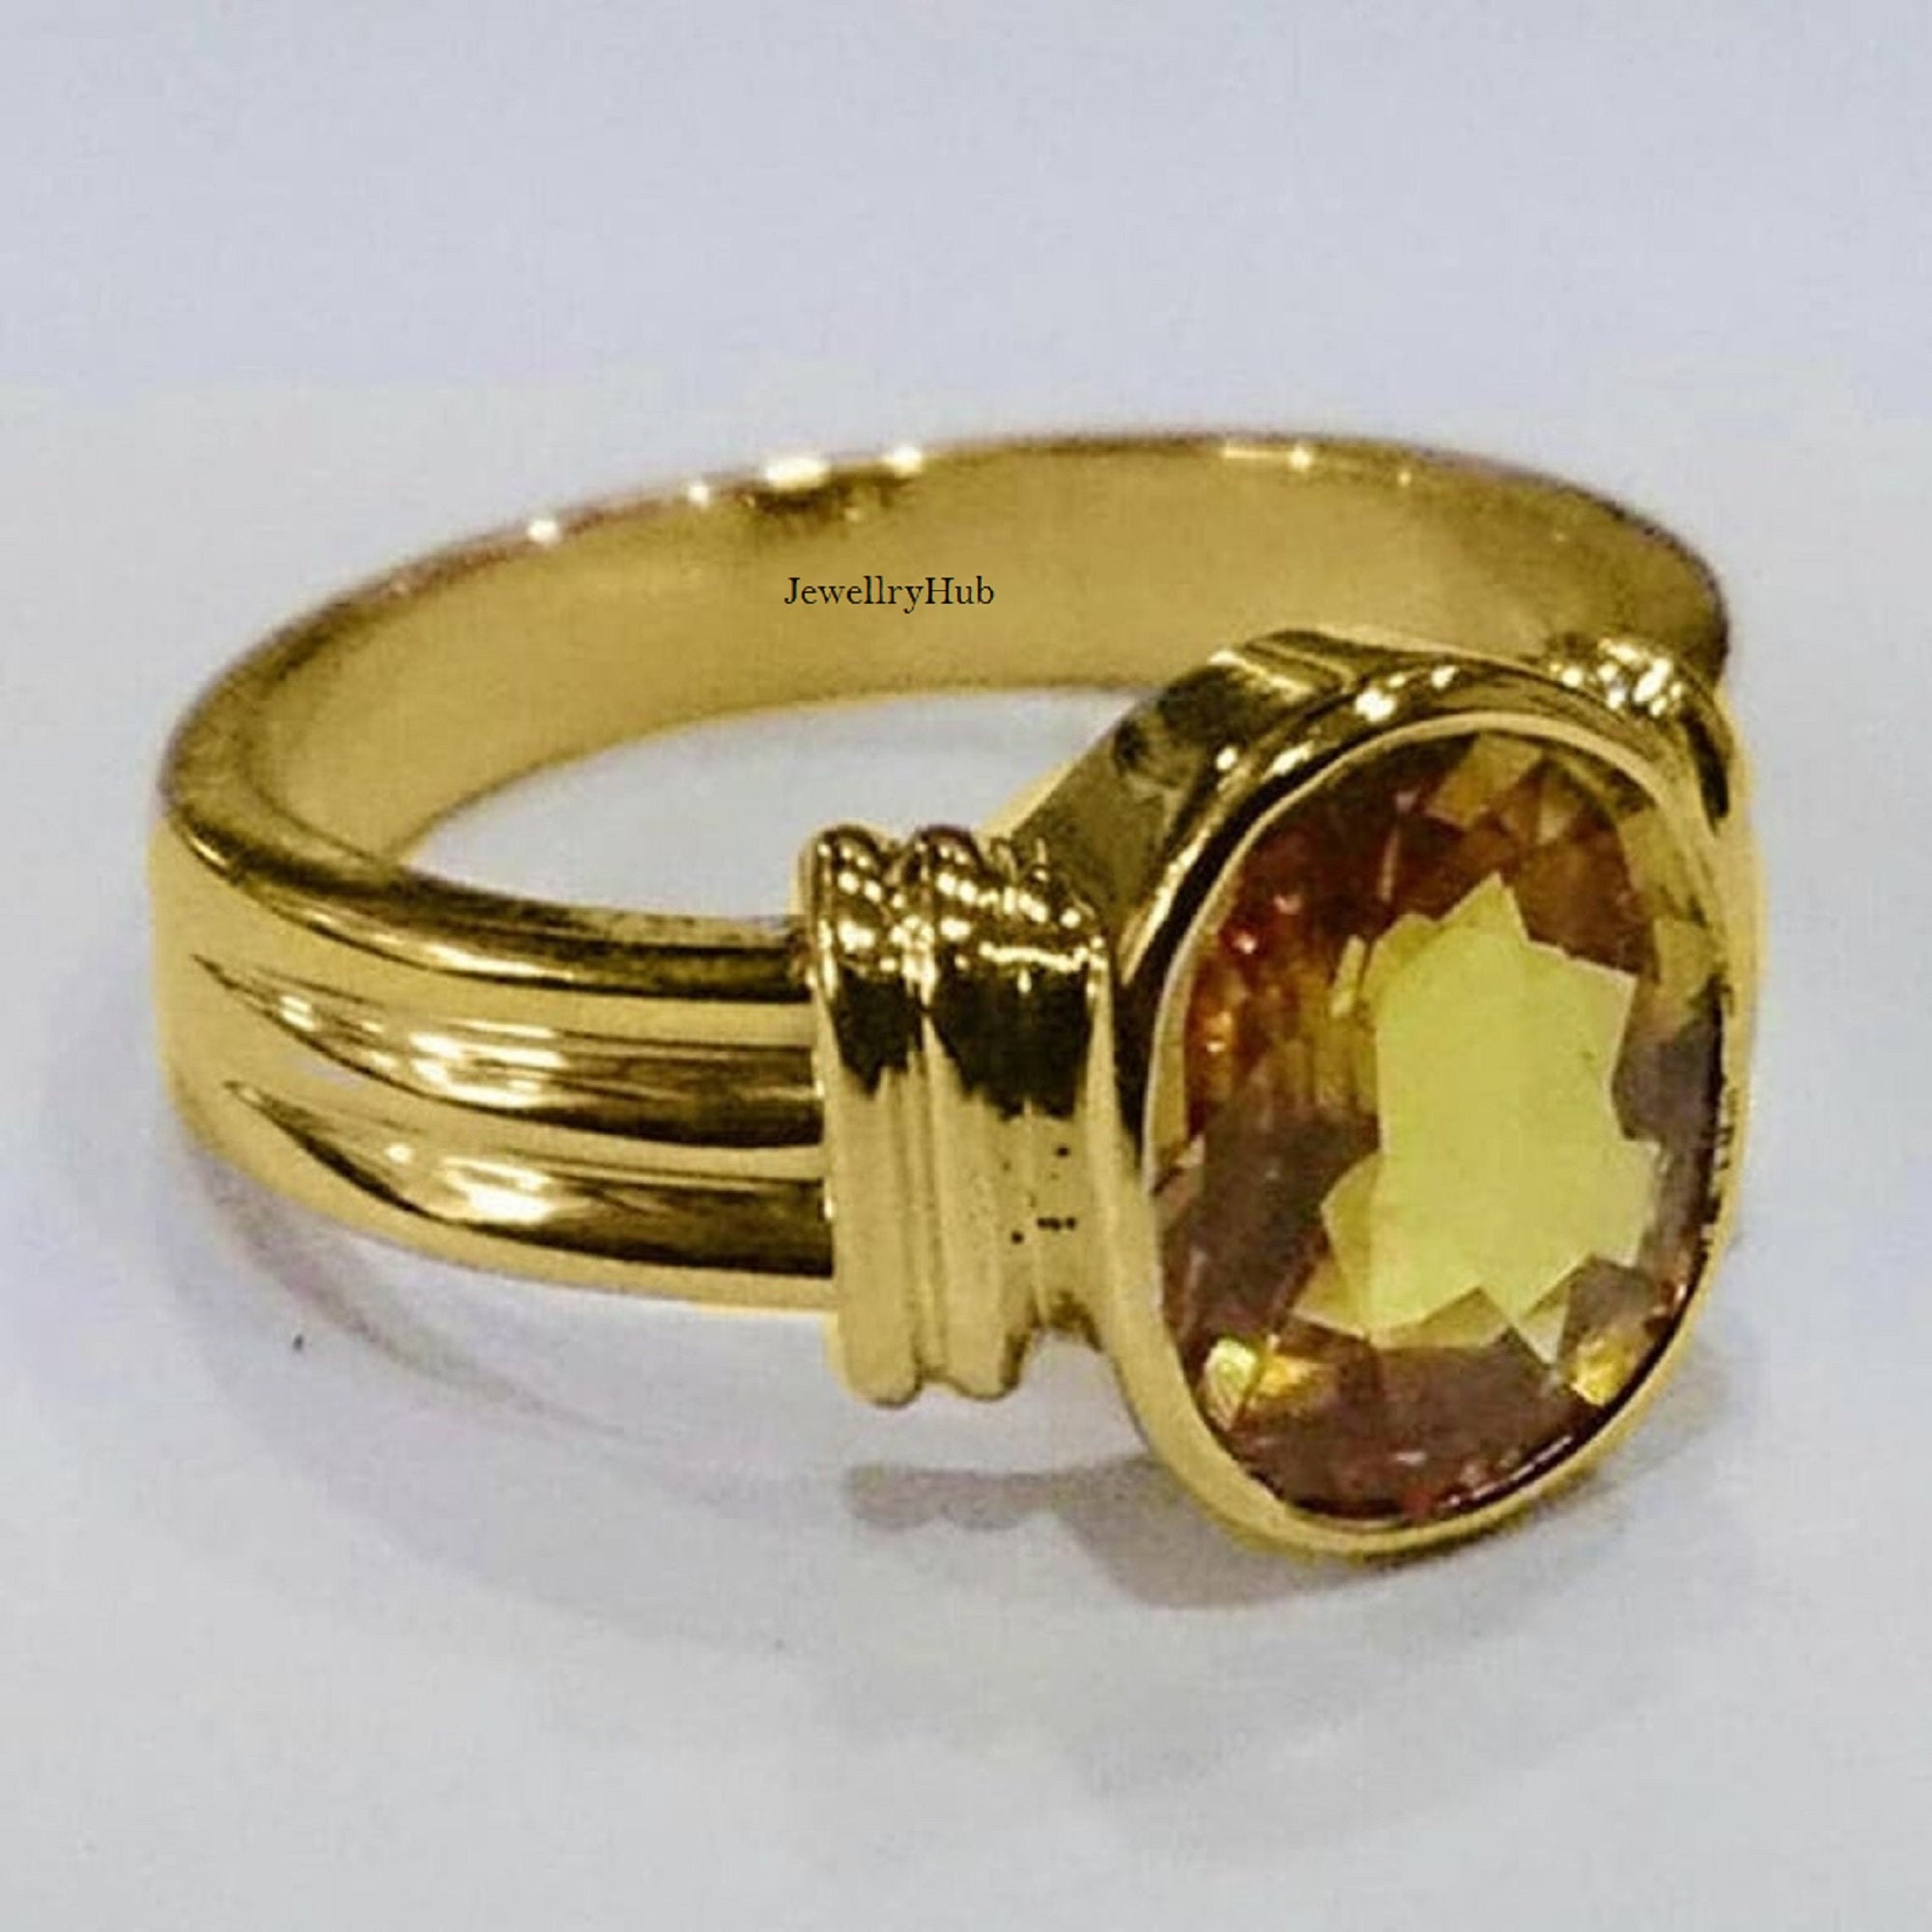 Original Yellow Sapphire Gemstone Ring For Men Design by | HTPGEMSTONES | -  YouTube